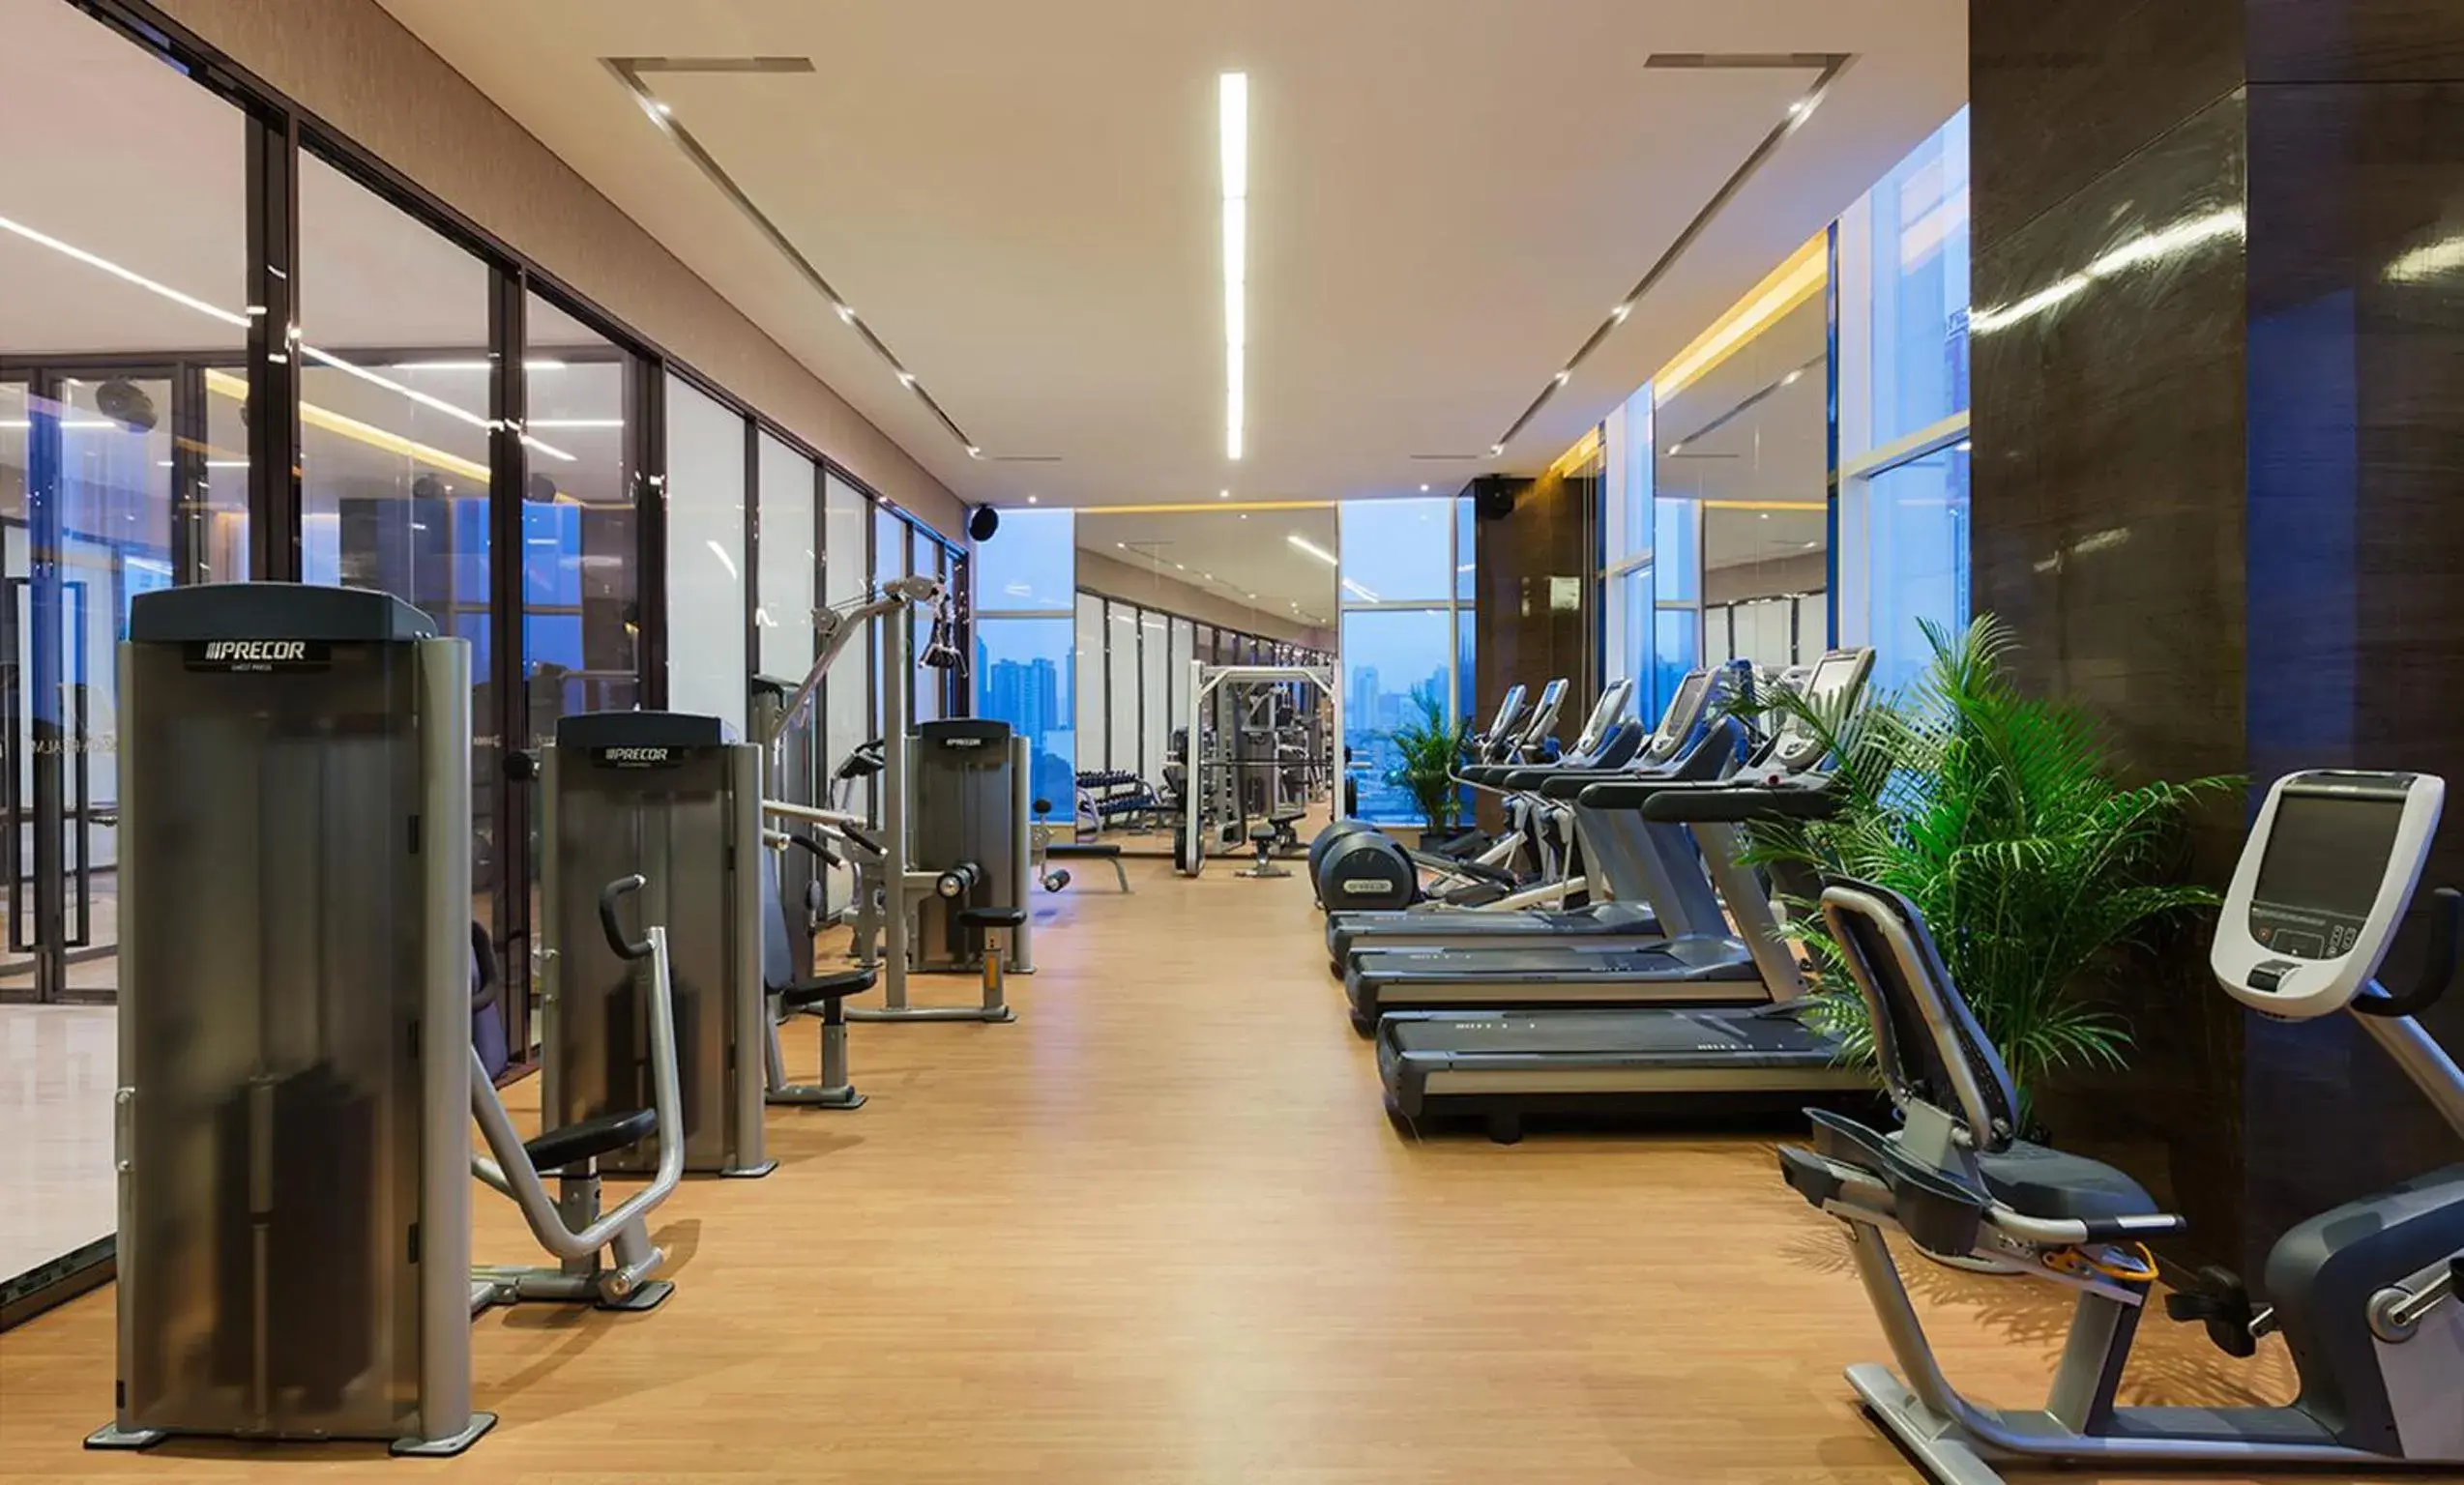 Fitness centre/facilities, Fitness Center/Facilities in Wanda Realm Hotel Wuhu